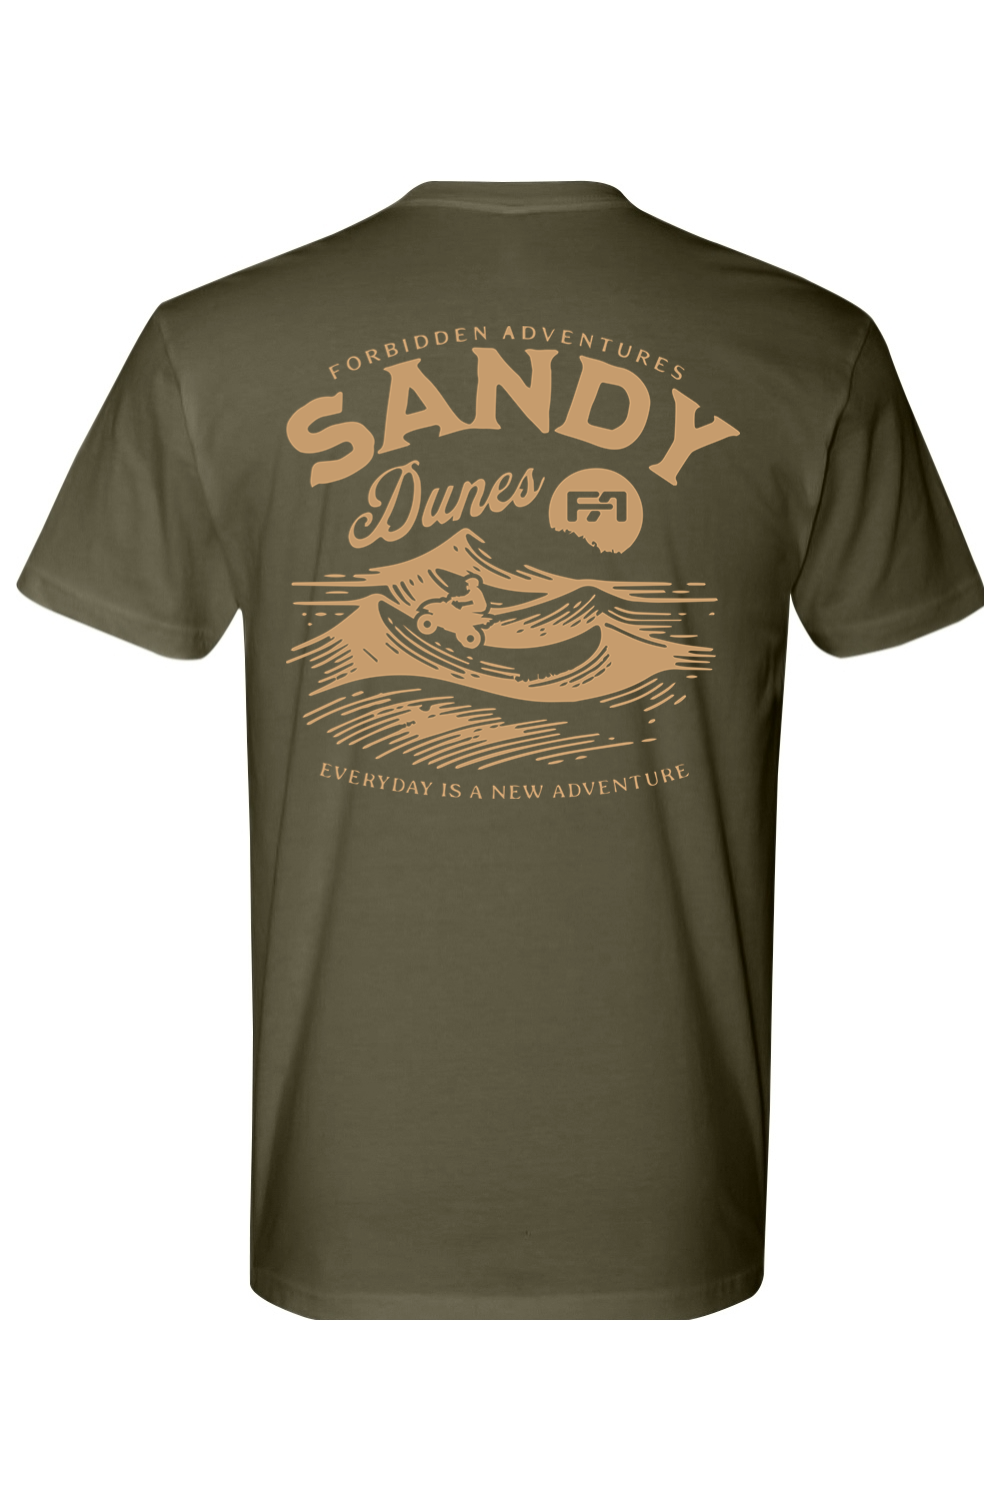 Sandy Dunes